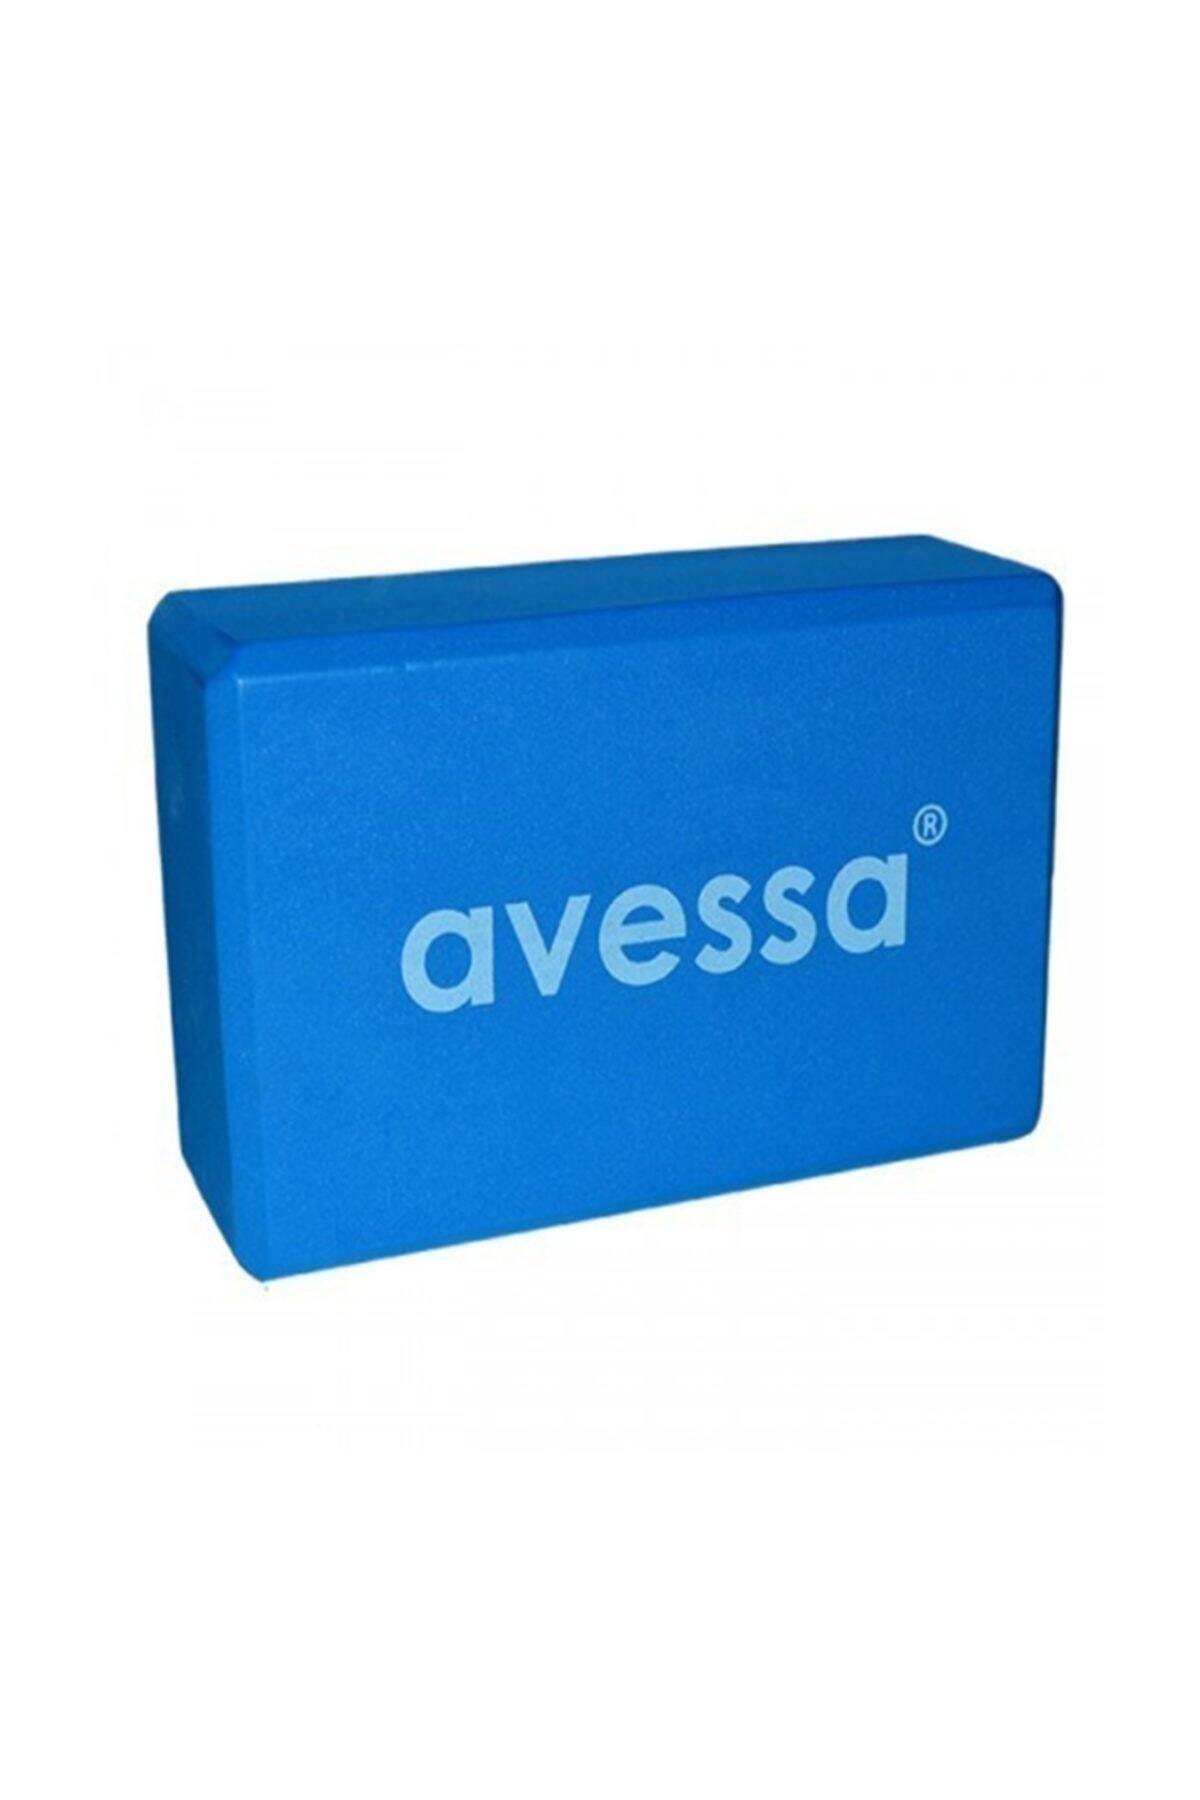 Avessa Yoga Blok 3x6x9 Cm